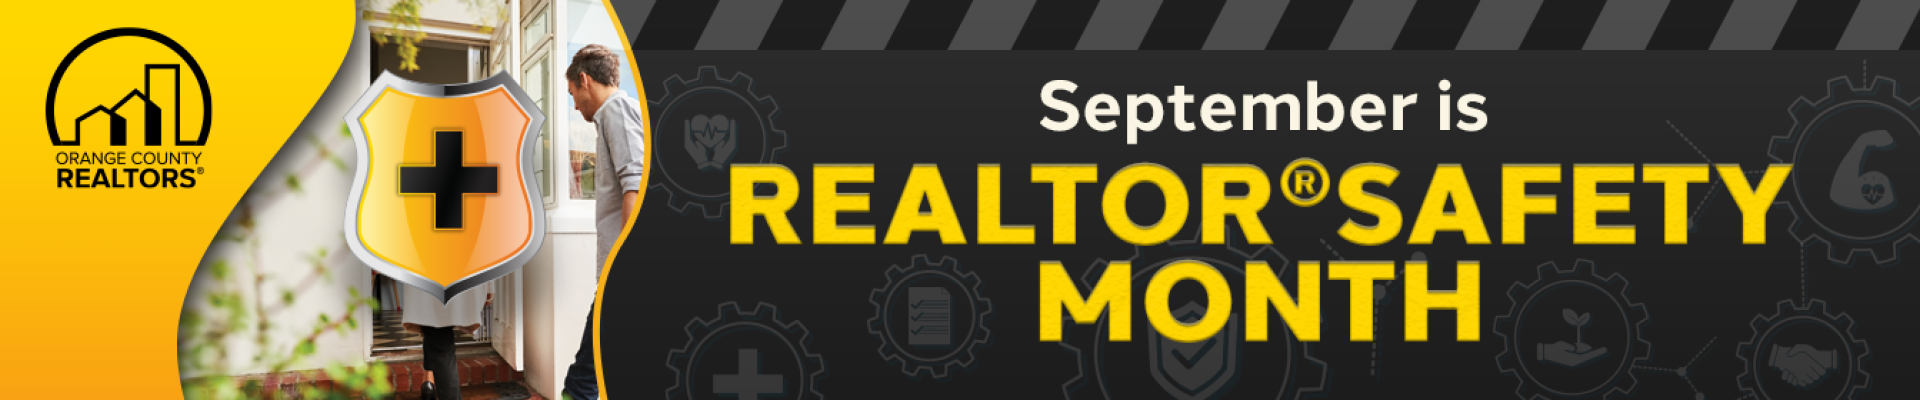 September is REALTOR Safety Month